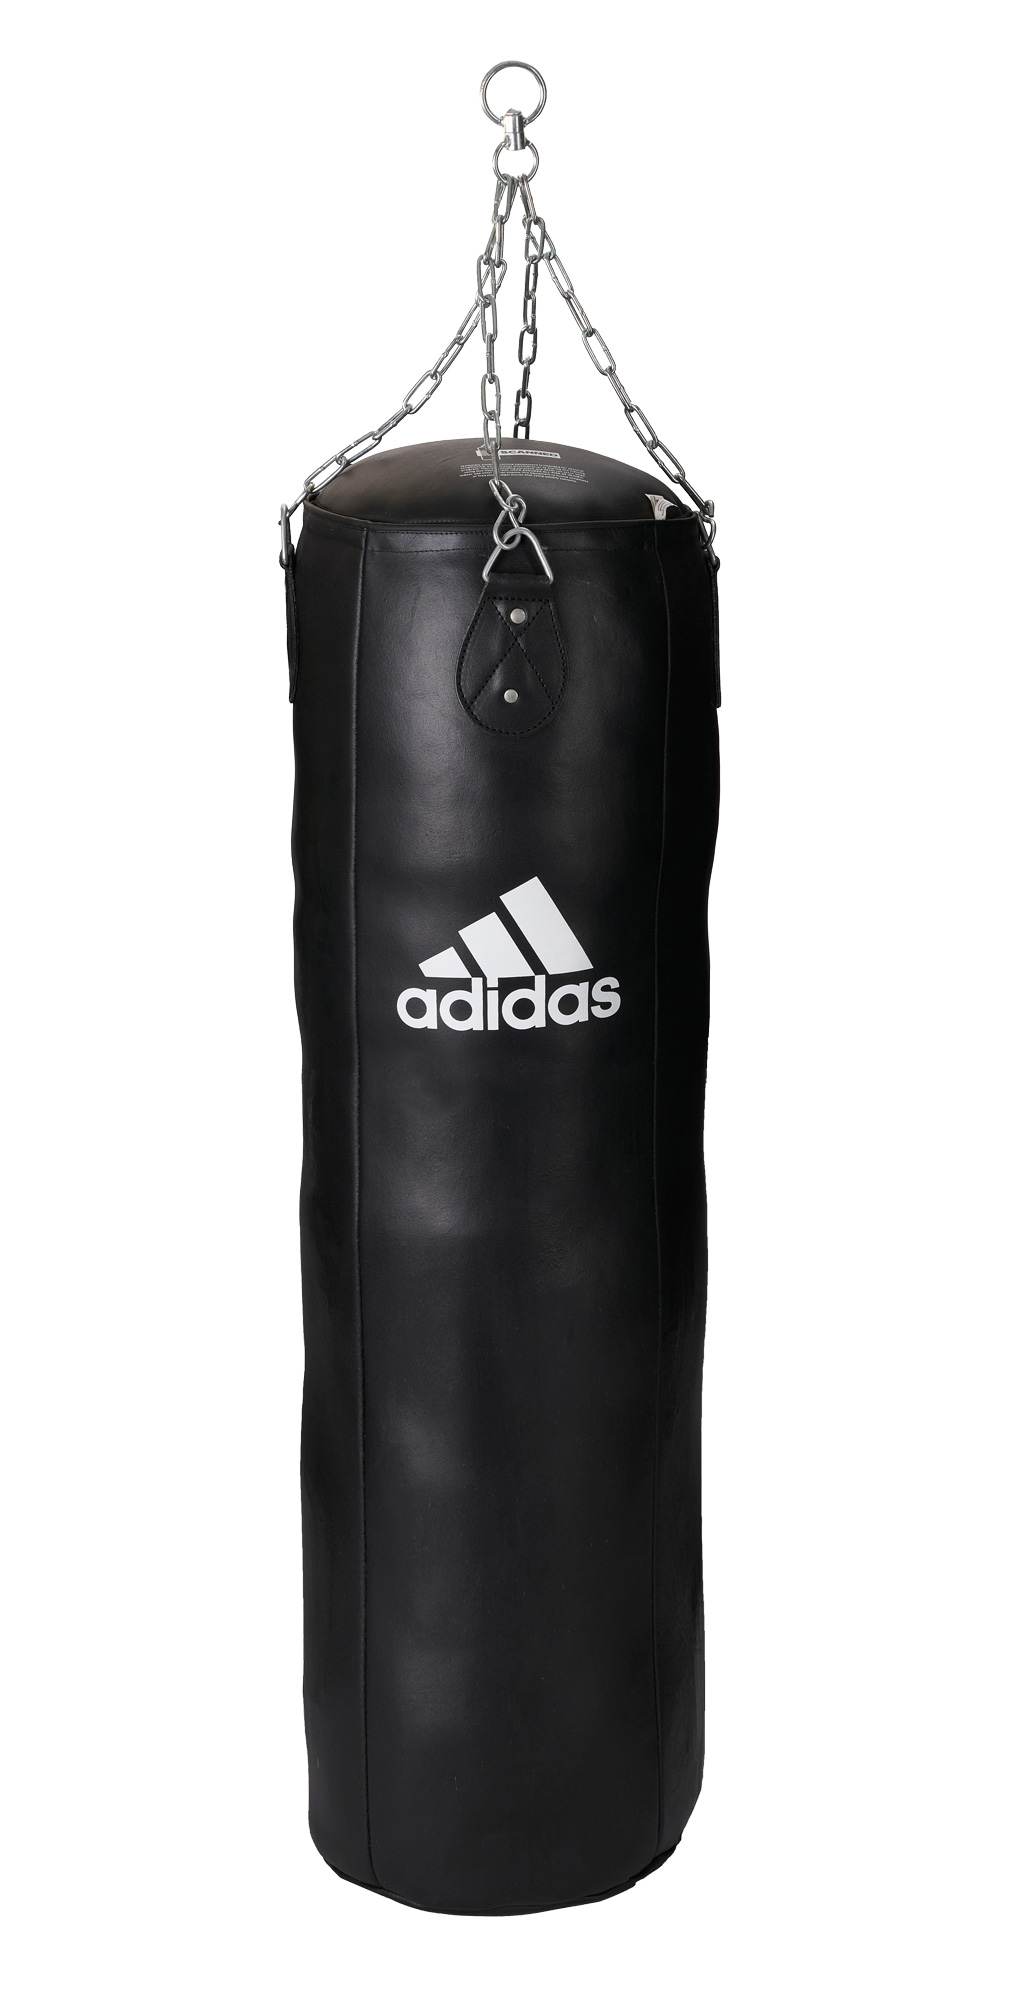 adidas boxing bag Leather ADIBAC161, filled